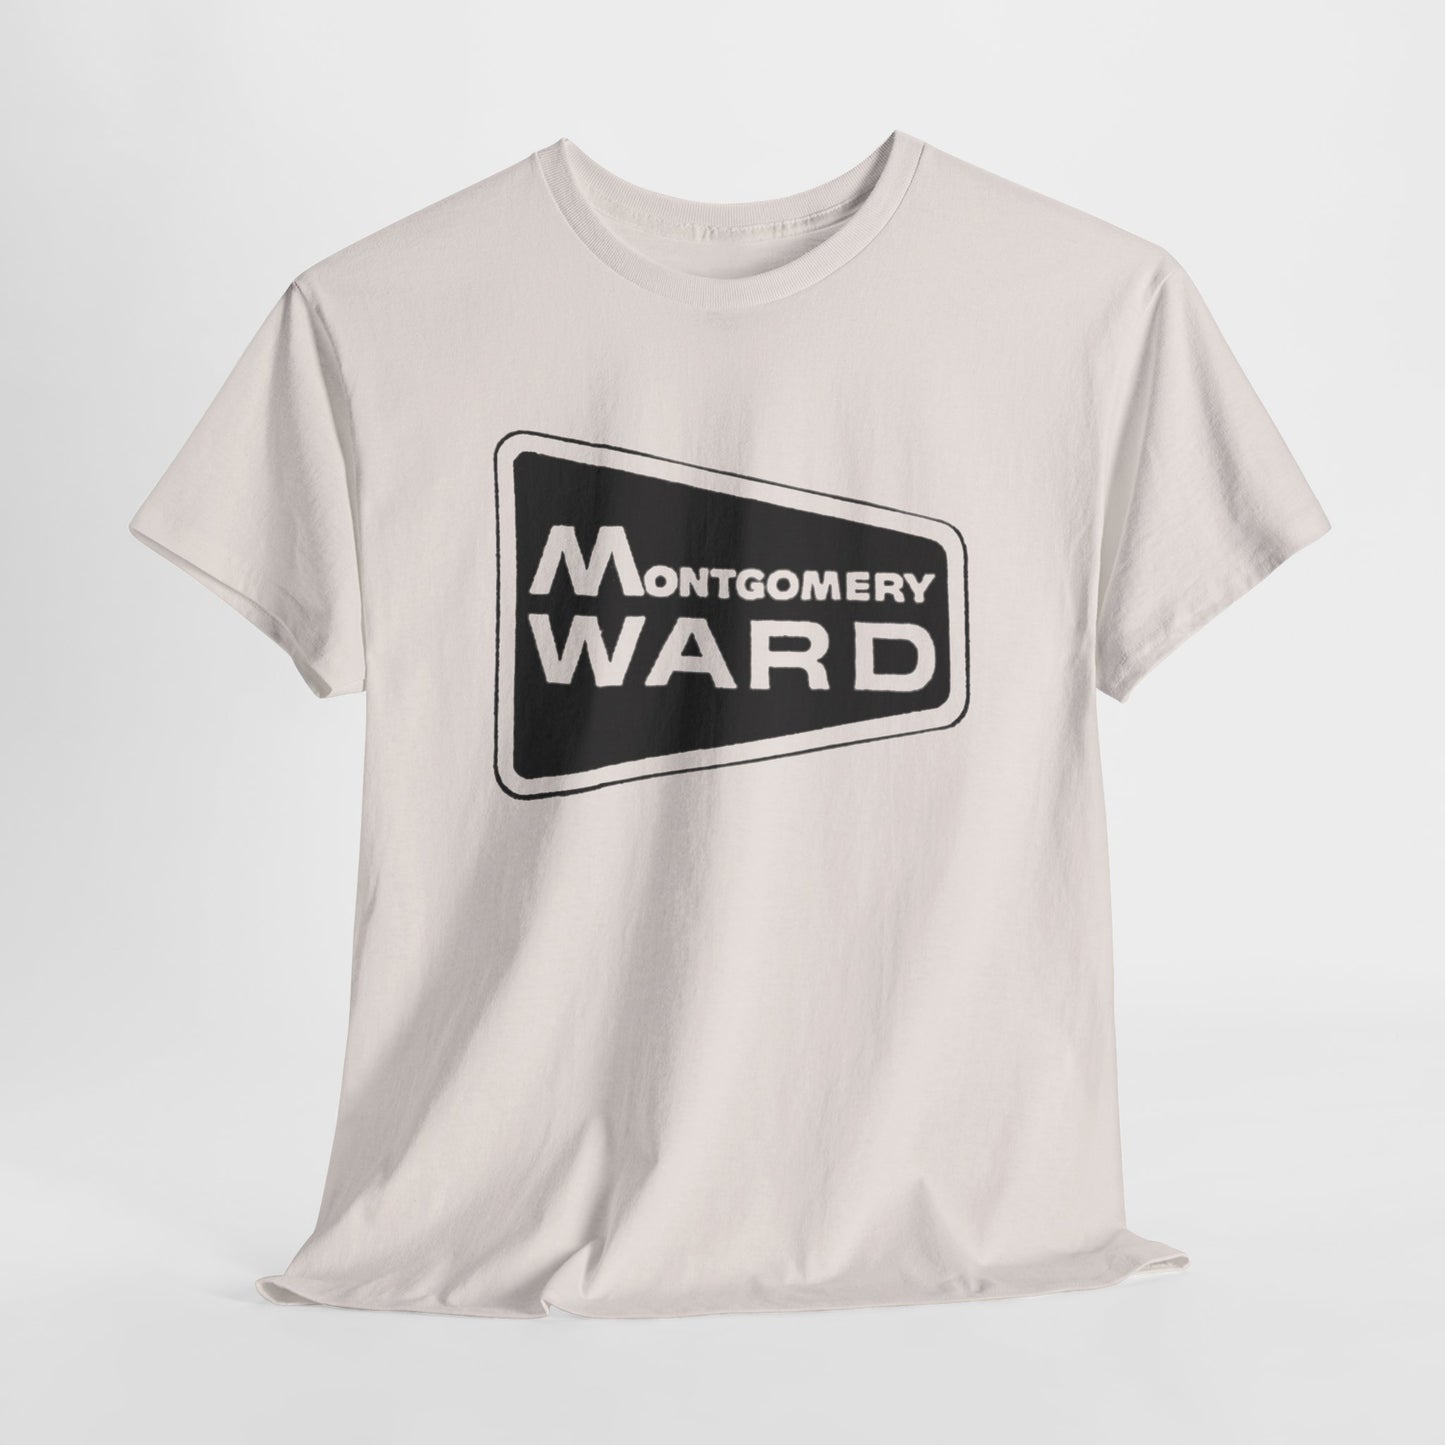 Retro Tee #64: Montgomery Ward